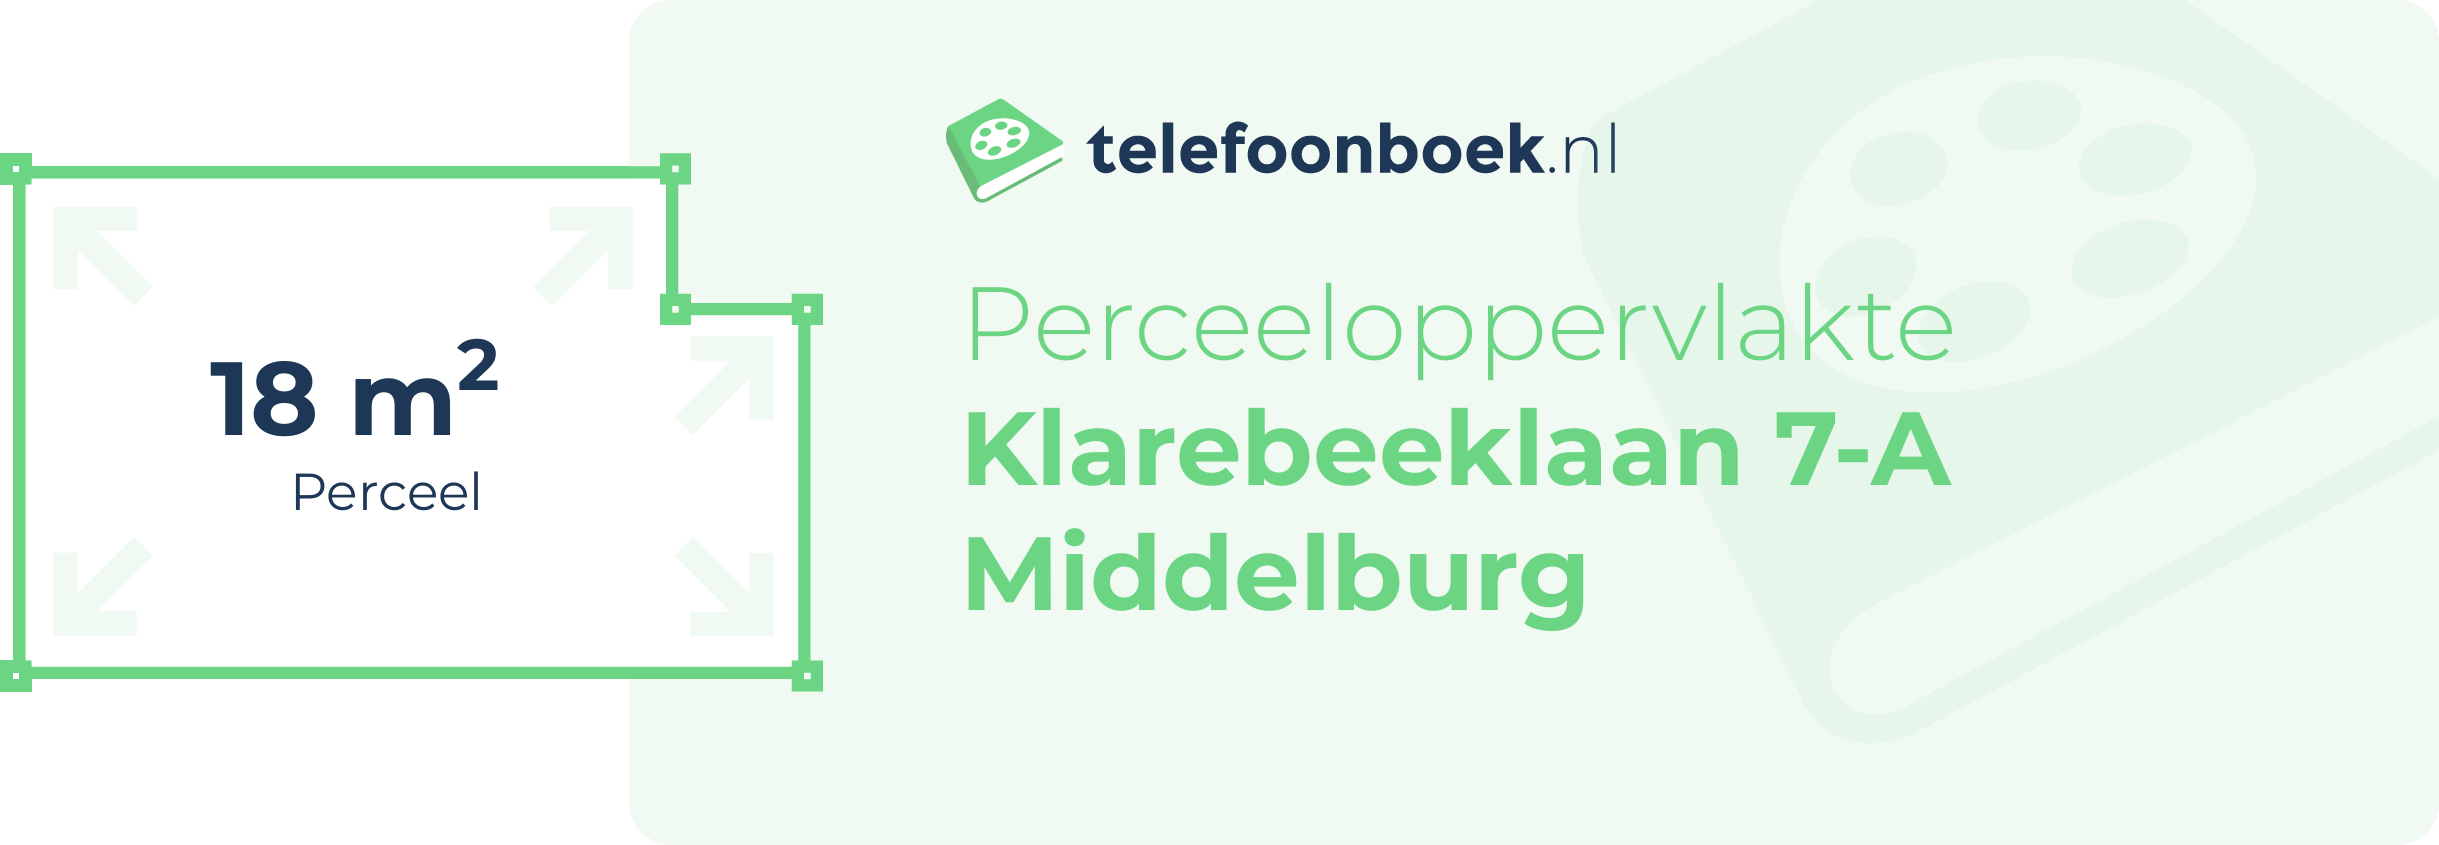 Perceeloppervlakte Klarebeeklaan 7-A Middelburg